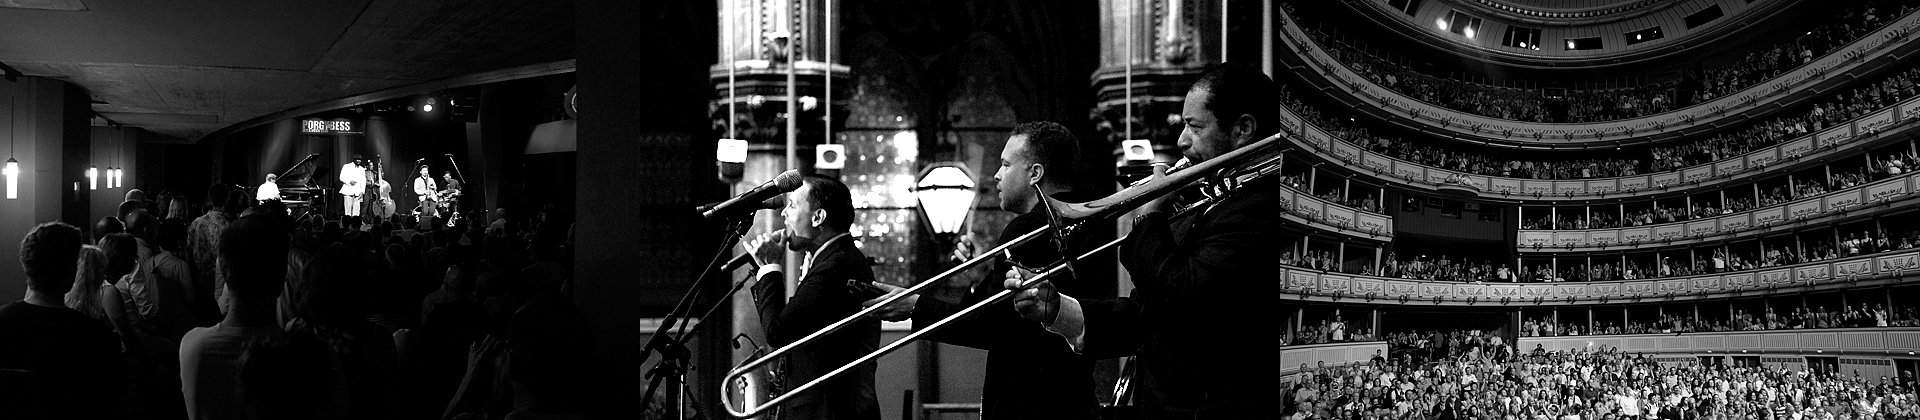 Gregory Porter at Porgy & Bess club, Preservation Hall Jazz Band at Vienna City Hall, JazzFest.Wien at Vienna State Opera